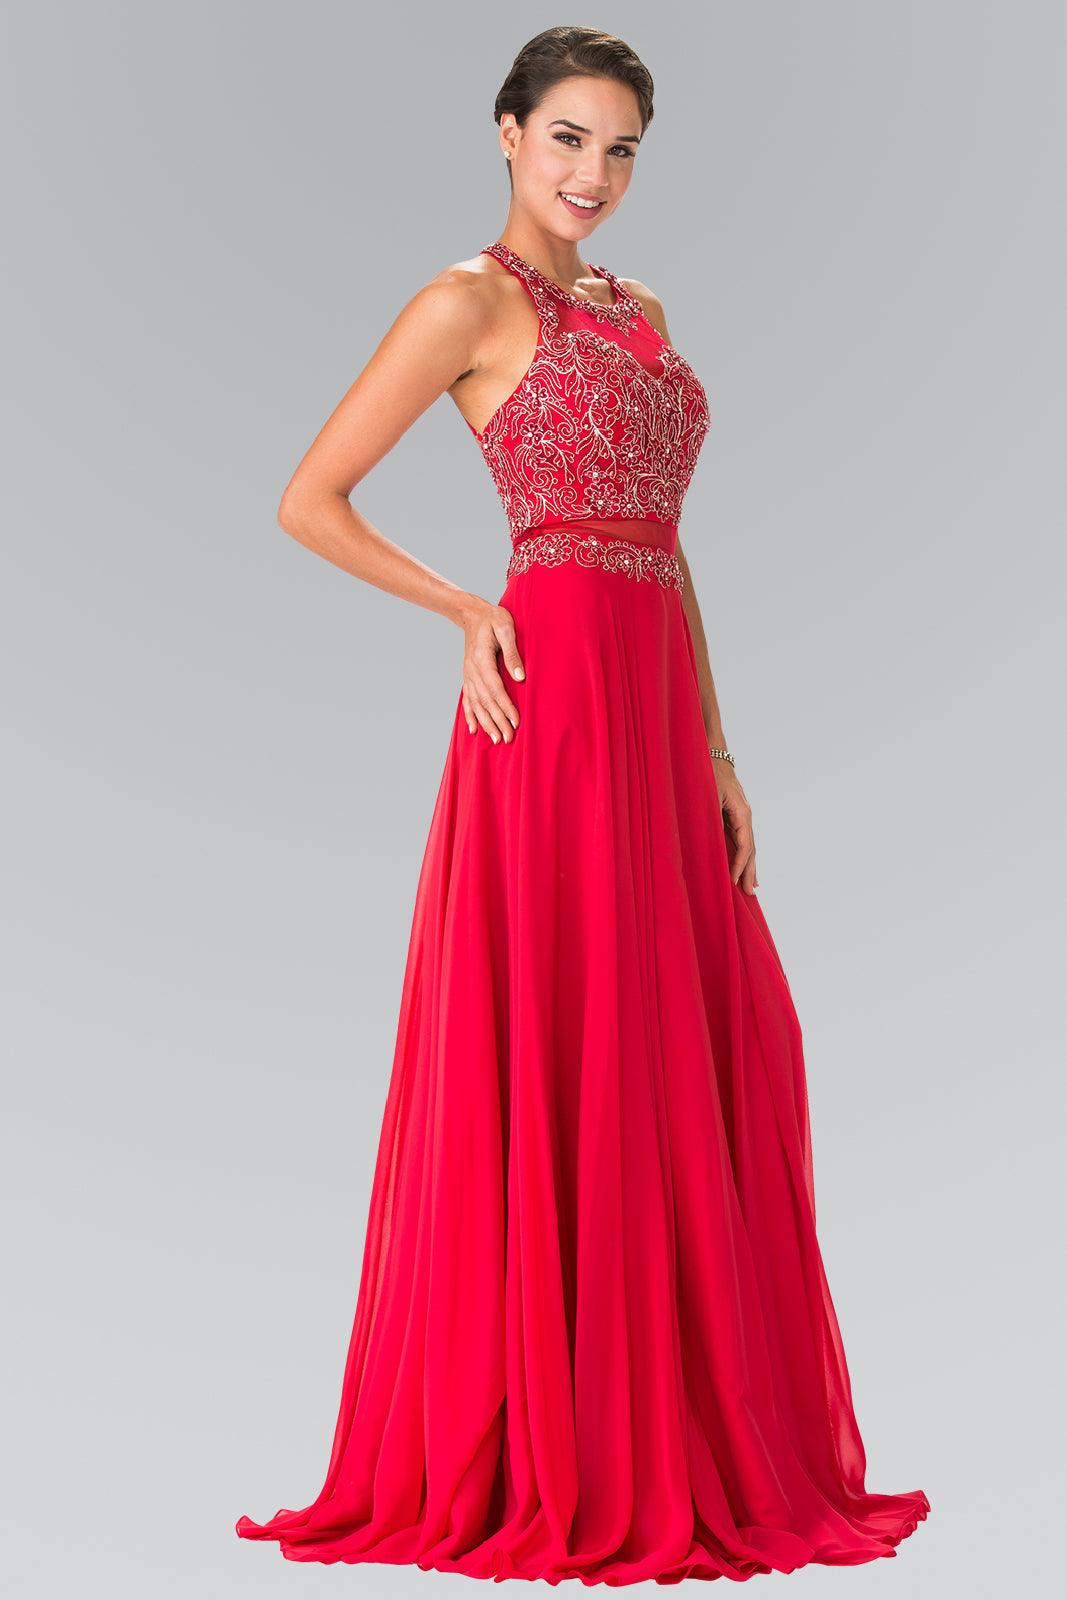 Long Formal Mock Two Piece Prom Dress - The Dress Outlet Elizabeth K